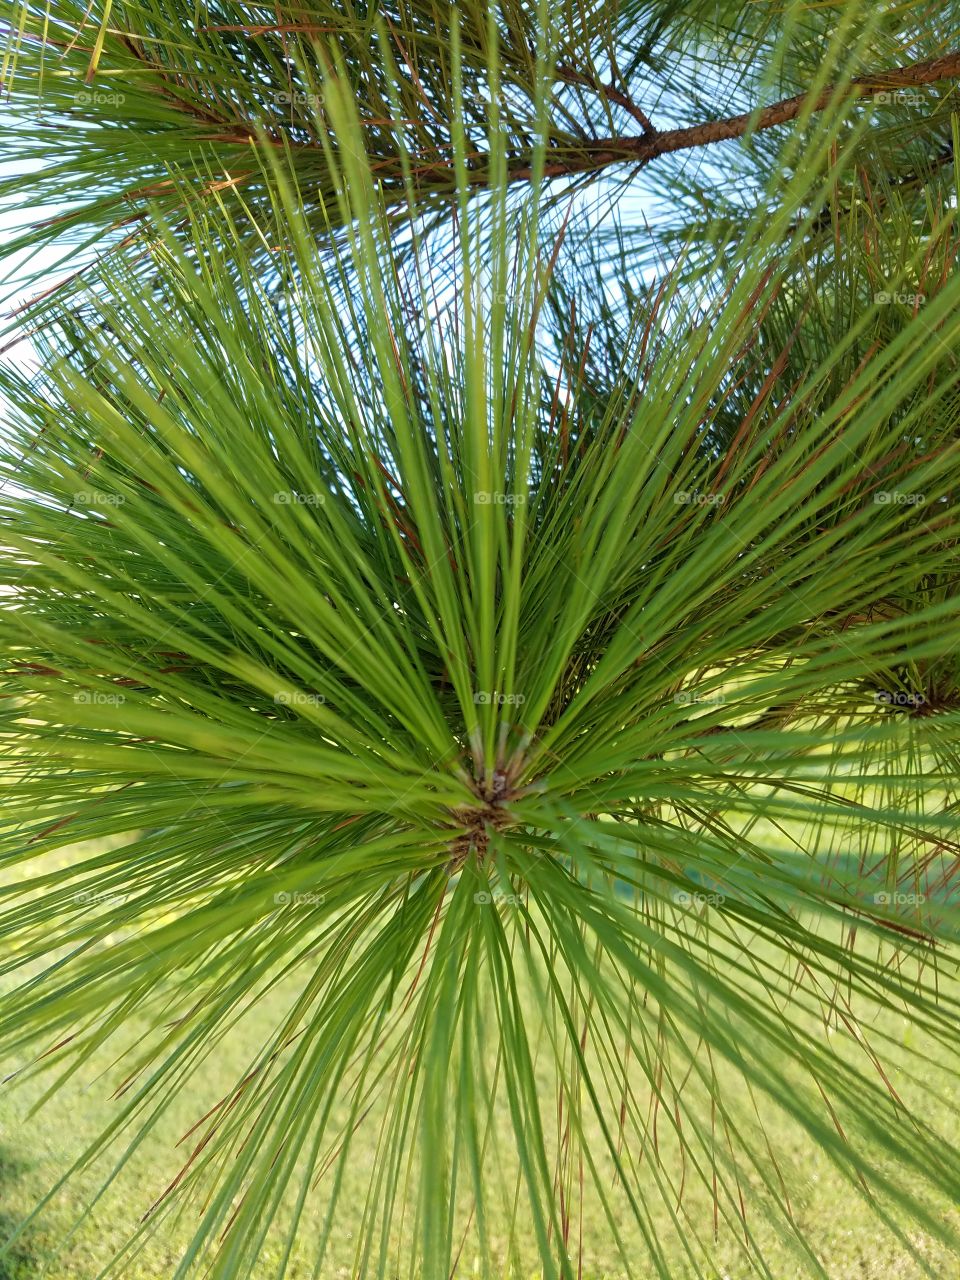 pine tree needles
green